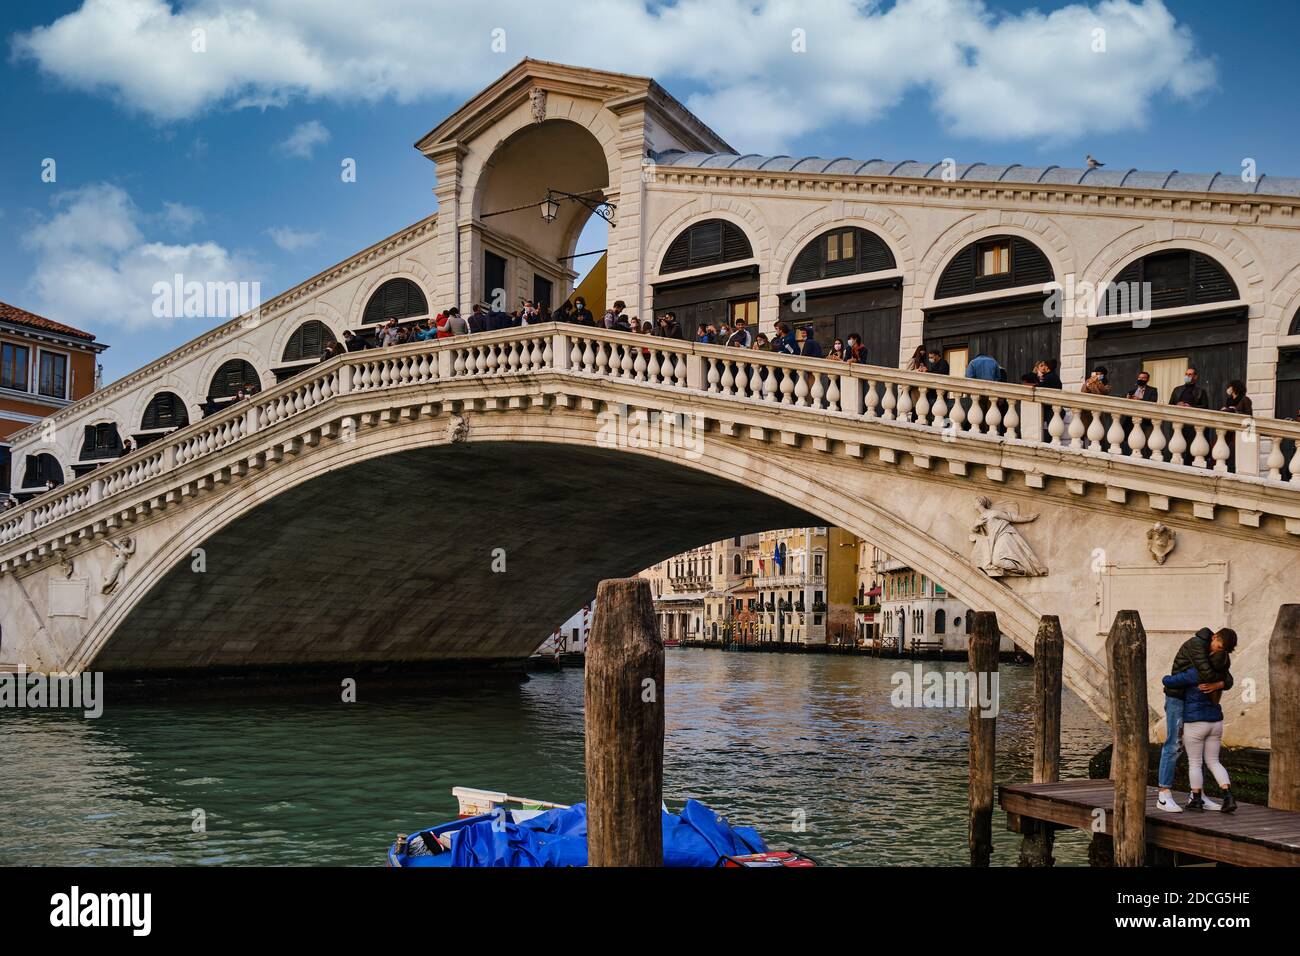 Venice, Veneto, Italy, Europe - October 16 2020: Rialto Bridge at COVID-19 time, with all the tourists wearing masks, Venice, Italy Stock Photo